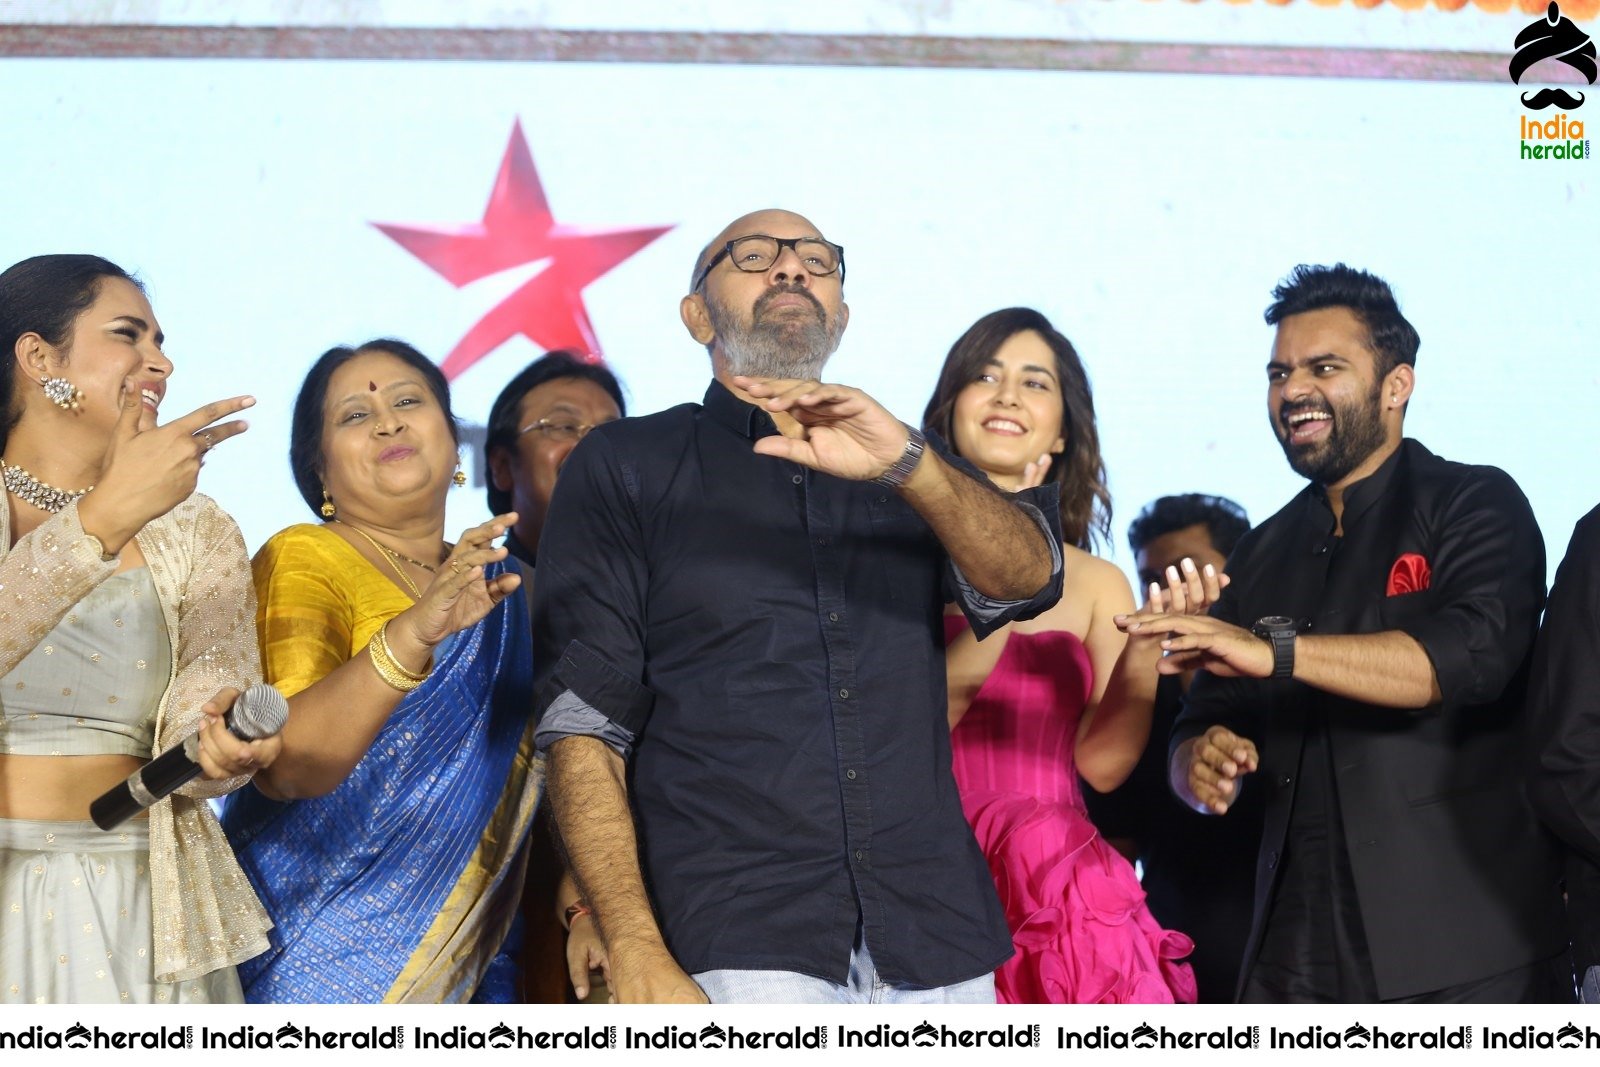 Actor Sathyaraj Dancing along with Raashi Khanna and Hari Teja On the Stage Set 1